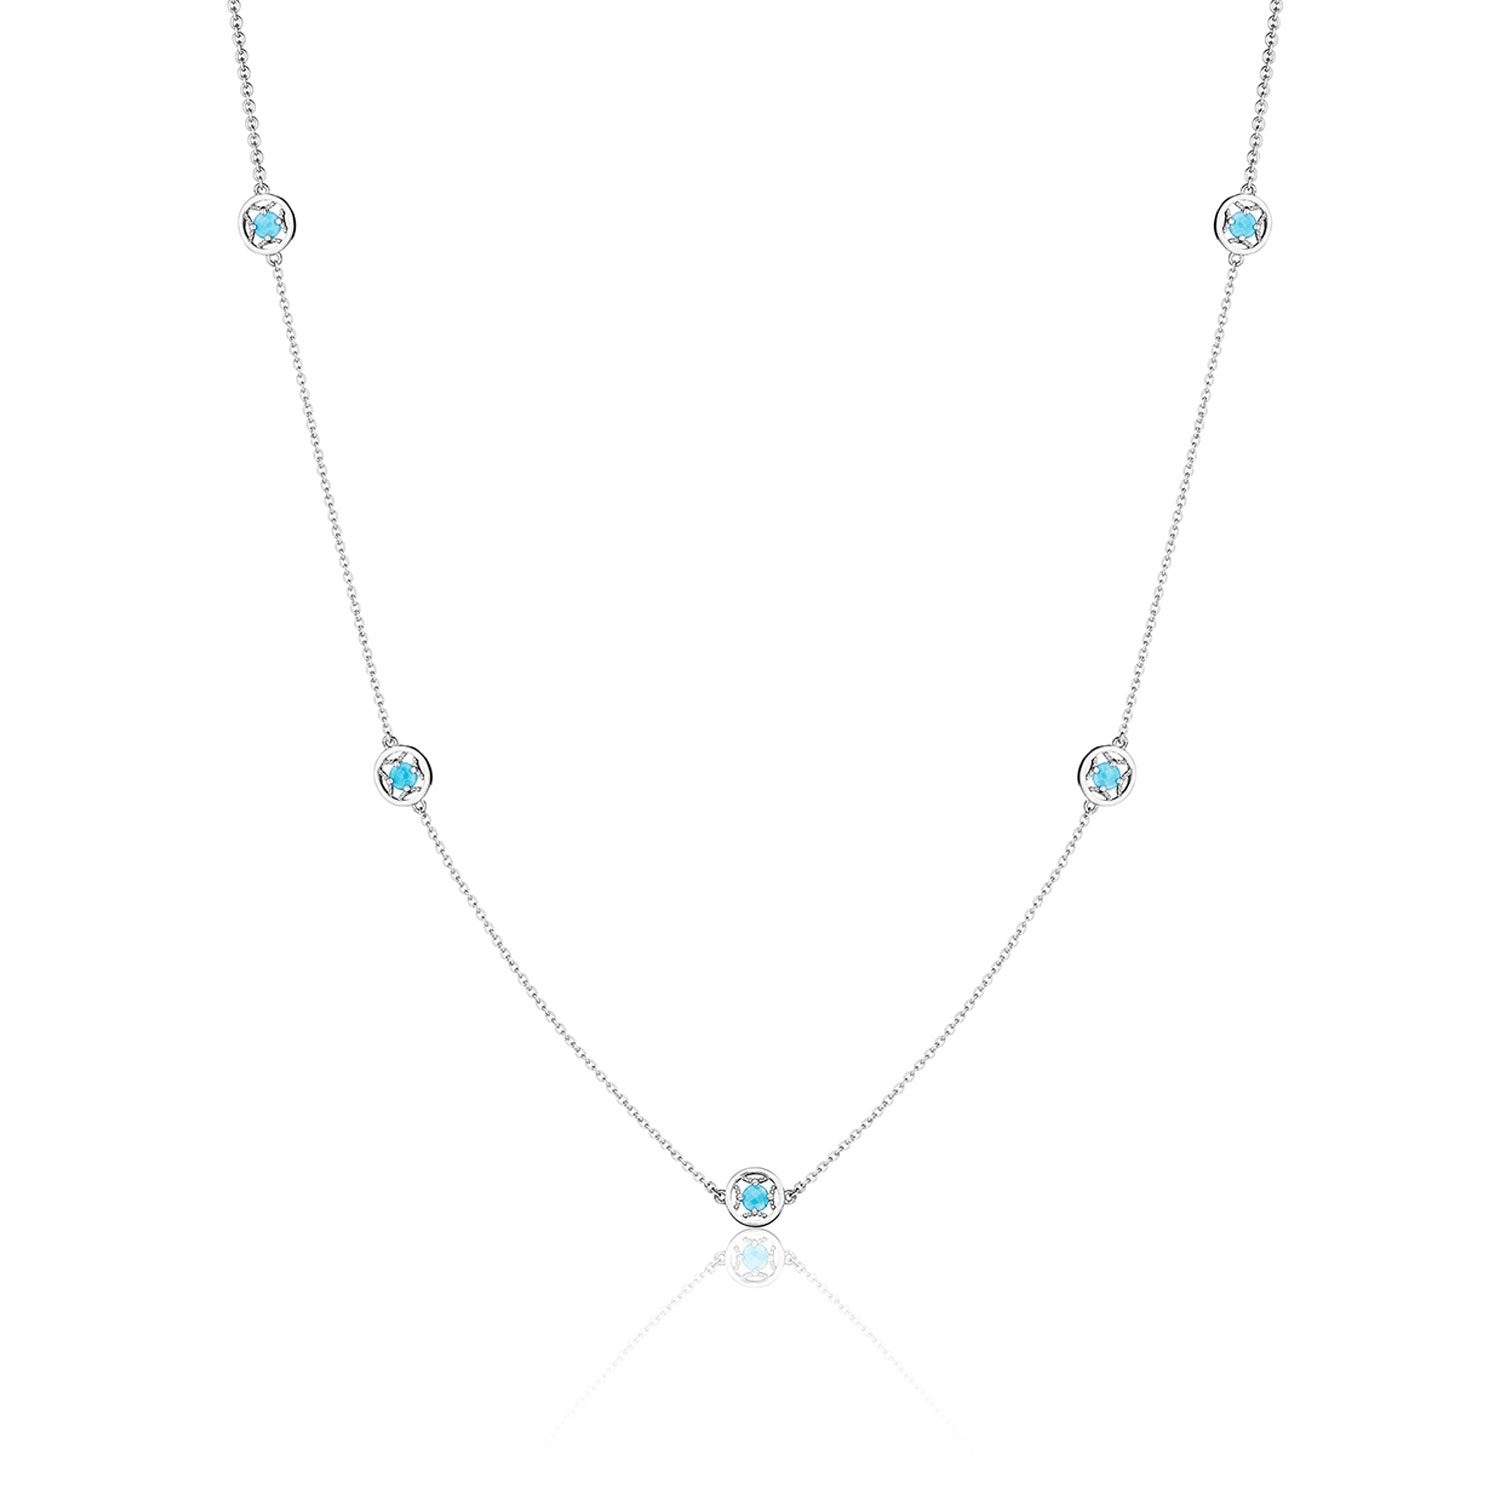 Tacori SN24248 5-Station Petite Gemstone Necklace with Turquoise